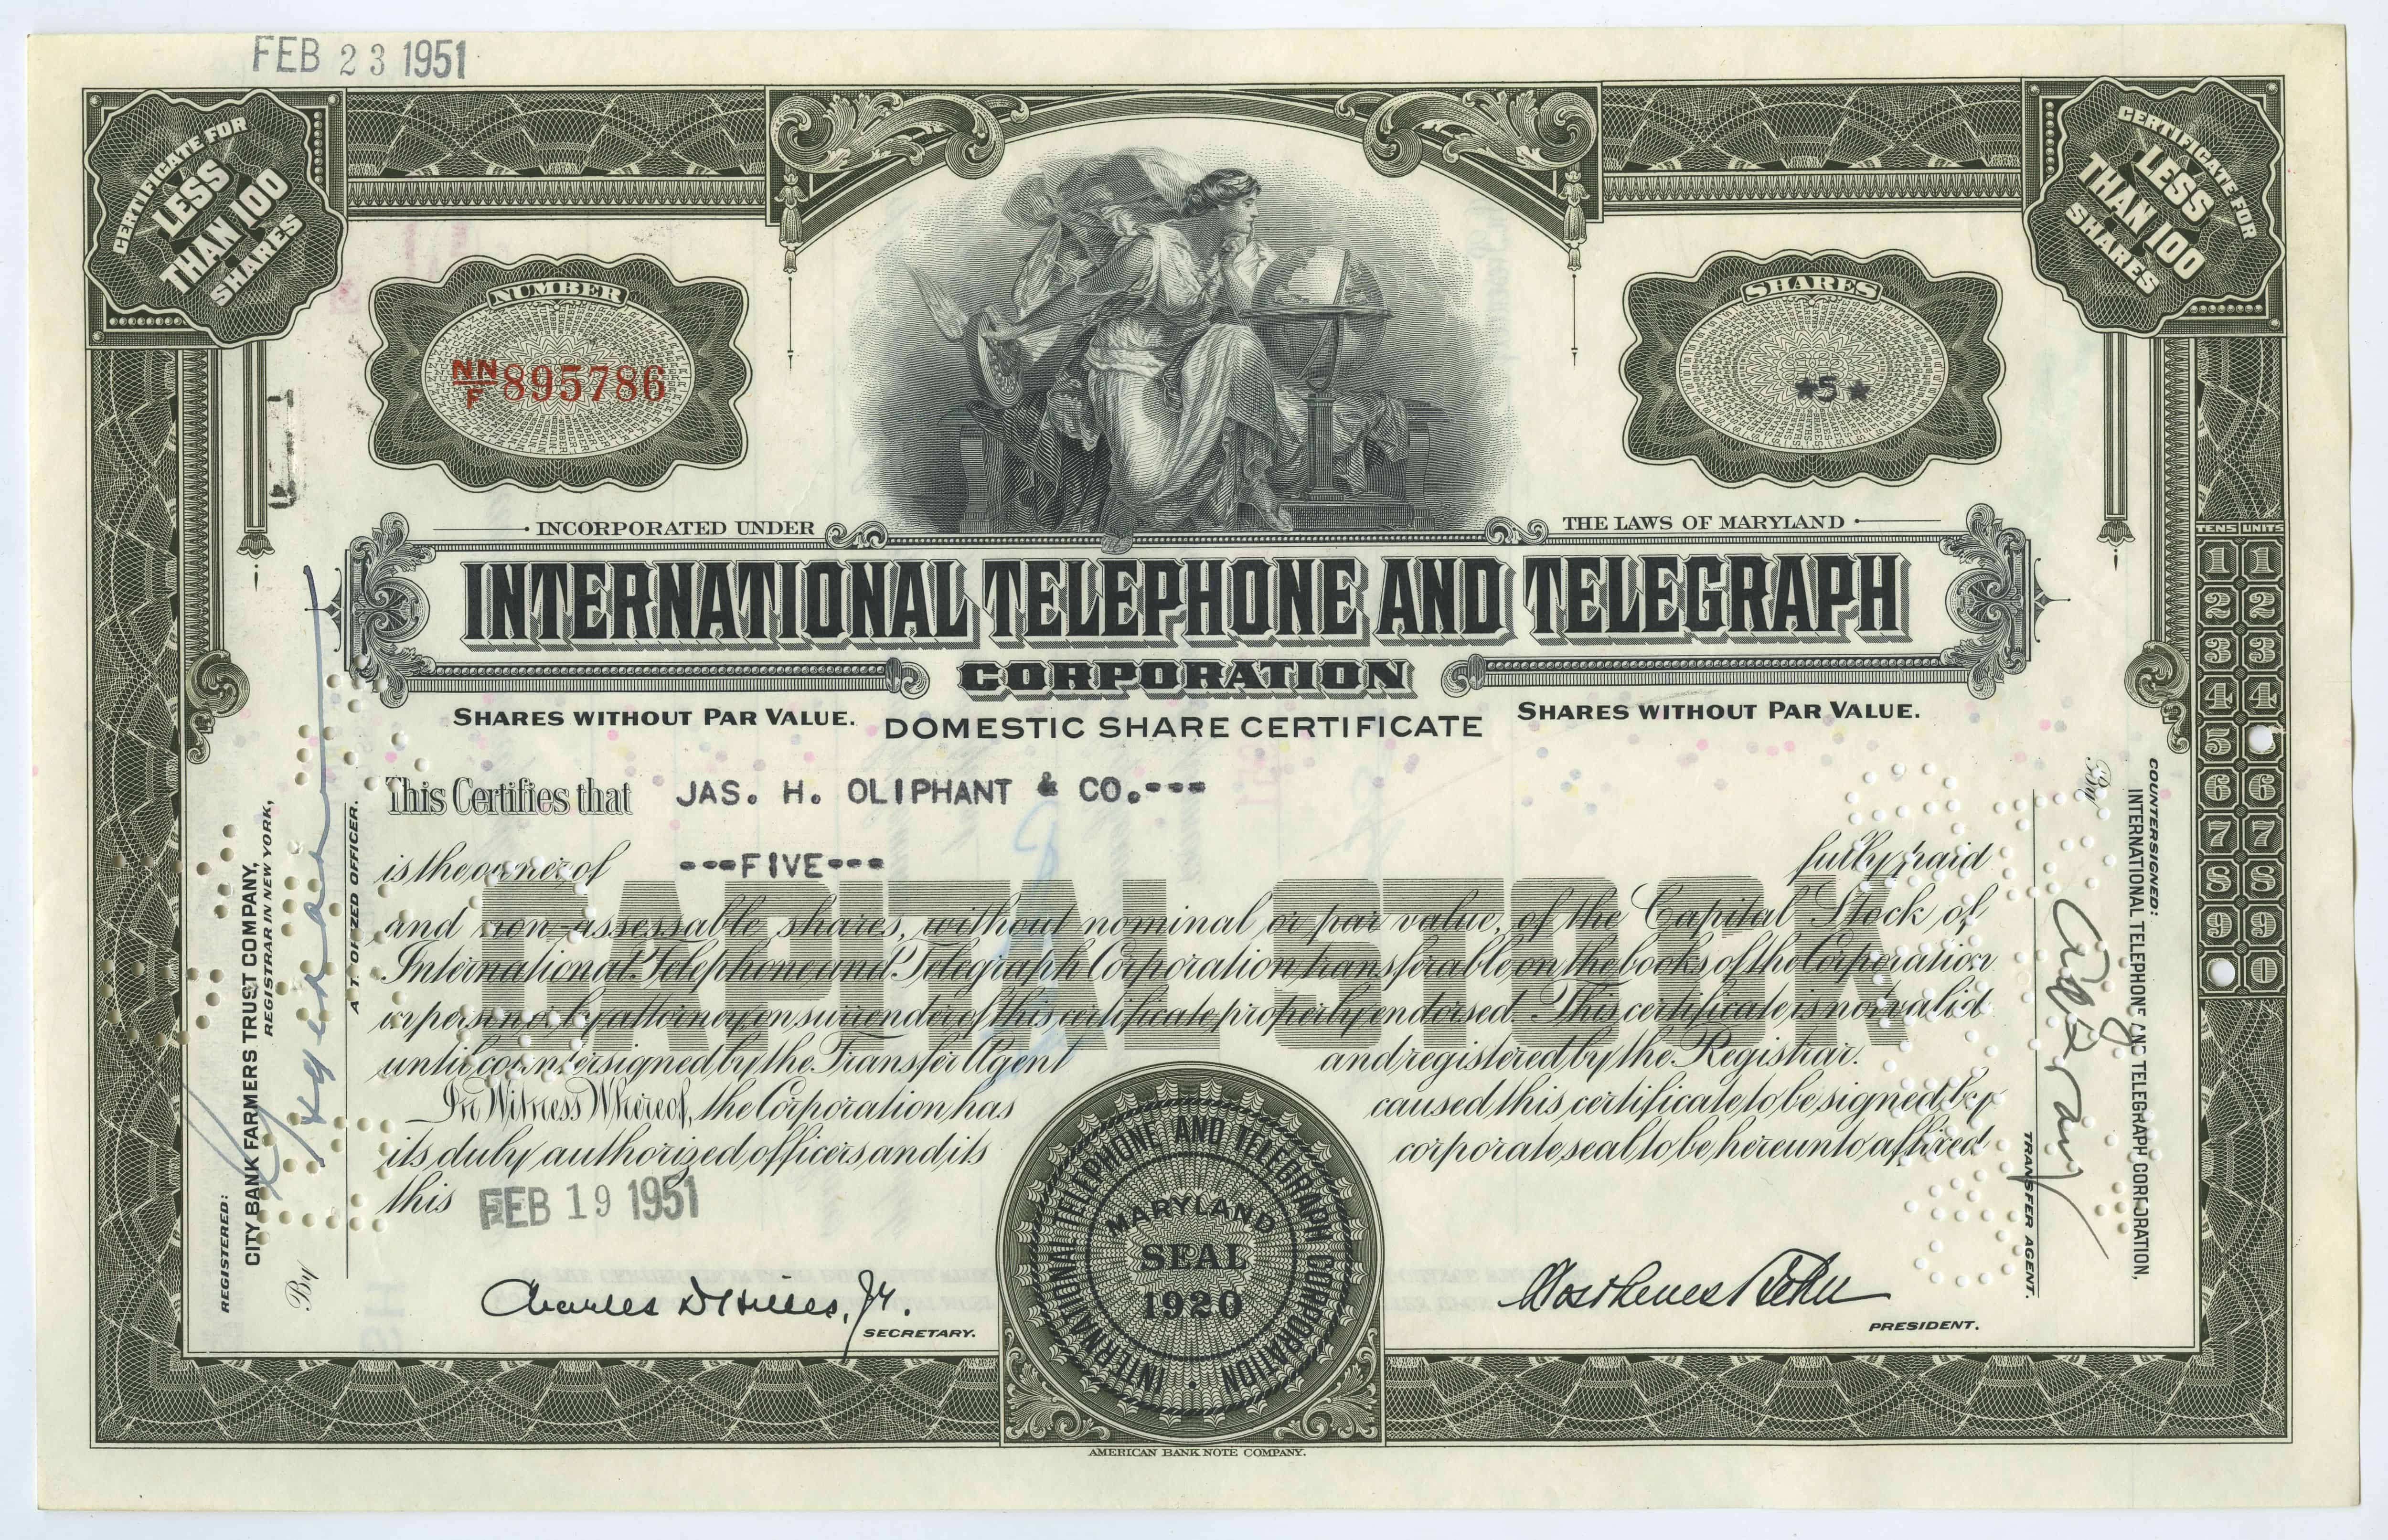 5 akcji spółki International Telephone and Telegraph Corporation z dnia 19 lutego 1951 roku